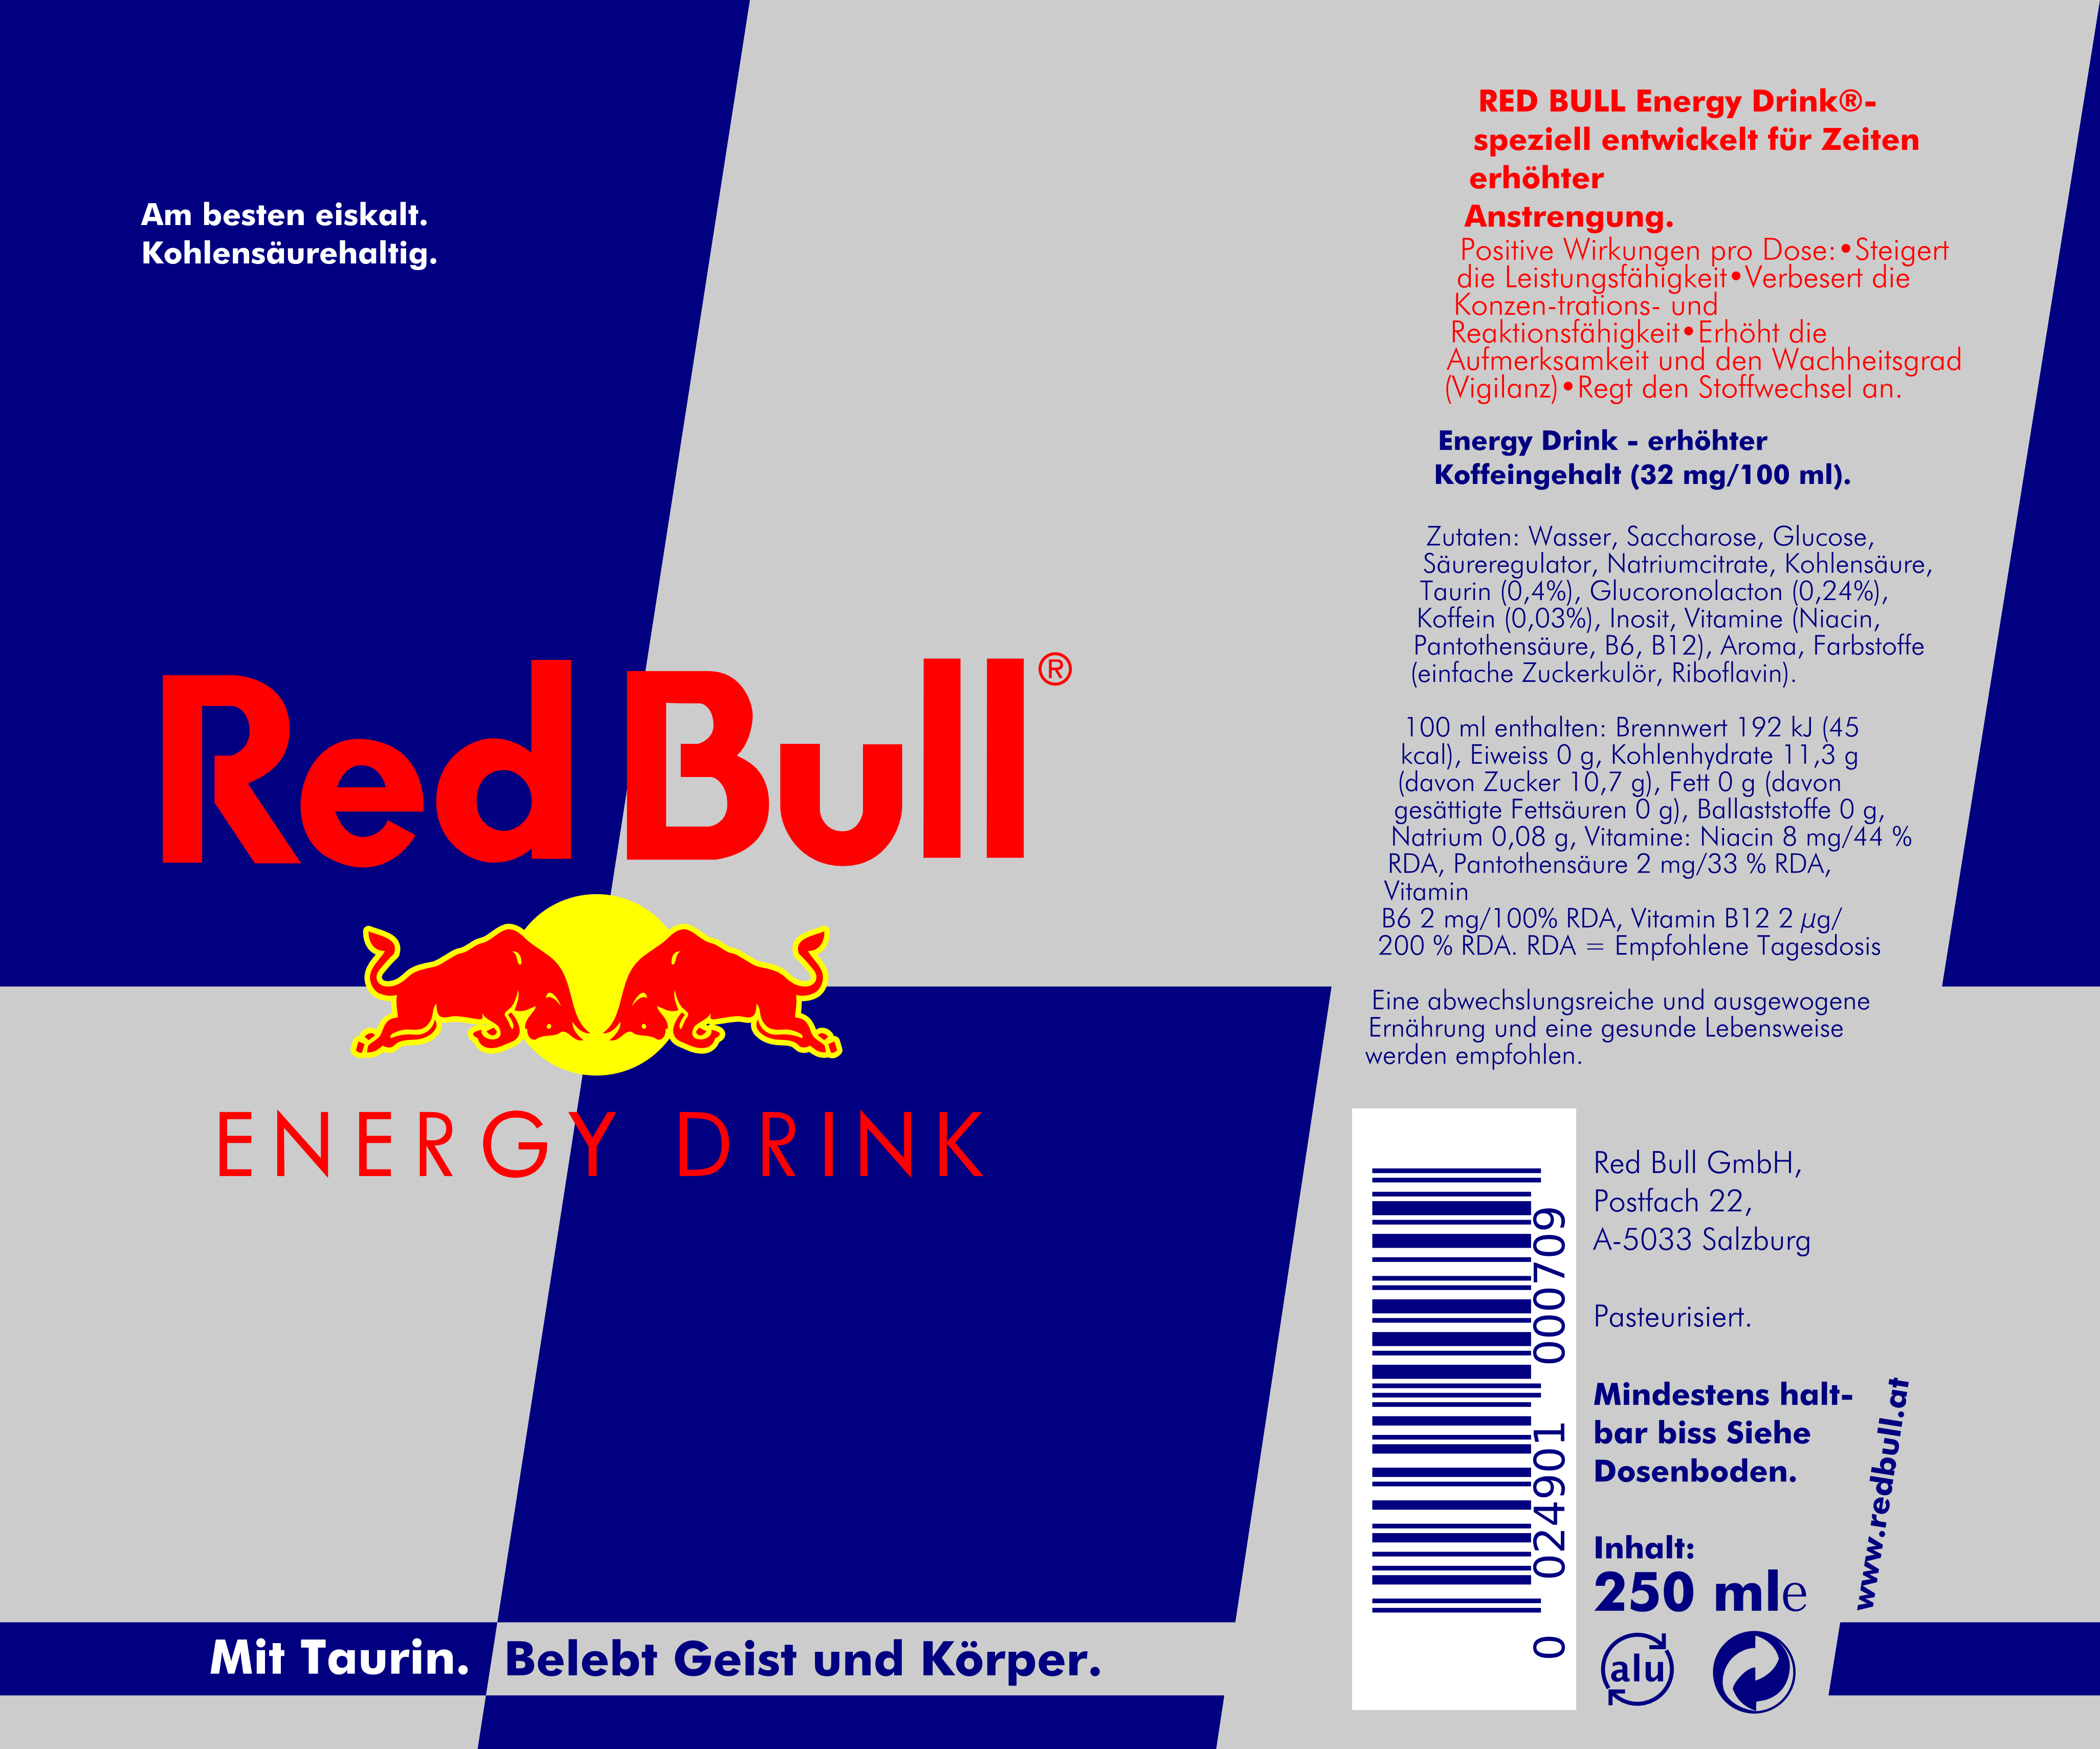 Outline of the Red Bull Logo - Had Red Bull kept their blue